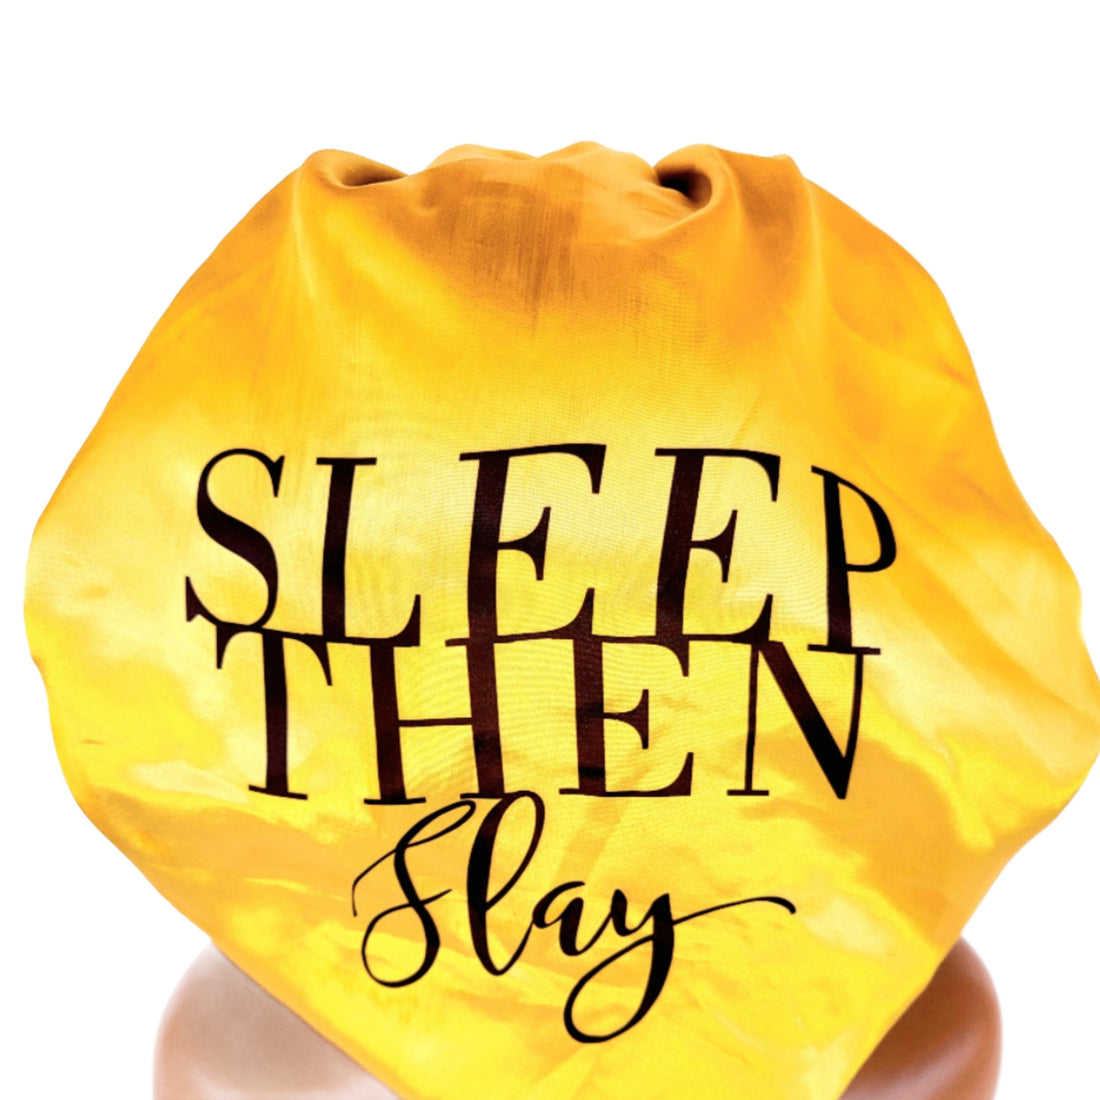 Reversible Sleeping Satin Wavy Bonnet Sleep Then Slay Gold and Black Color